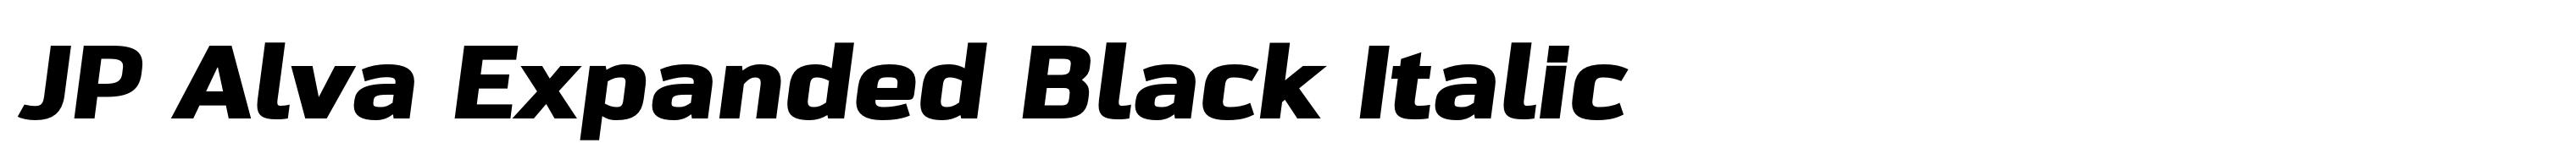 JP Alva Expanded Black Italic